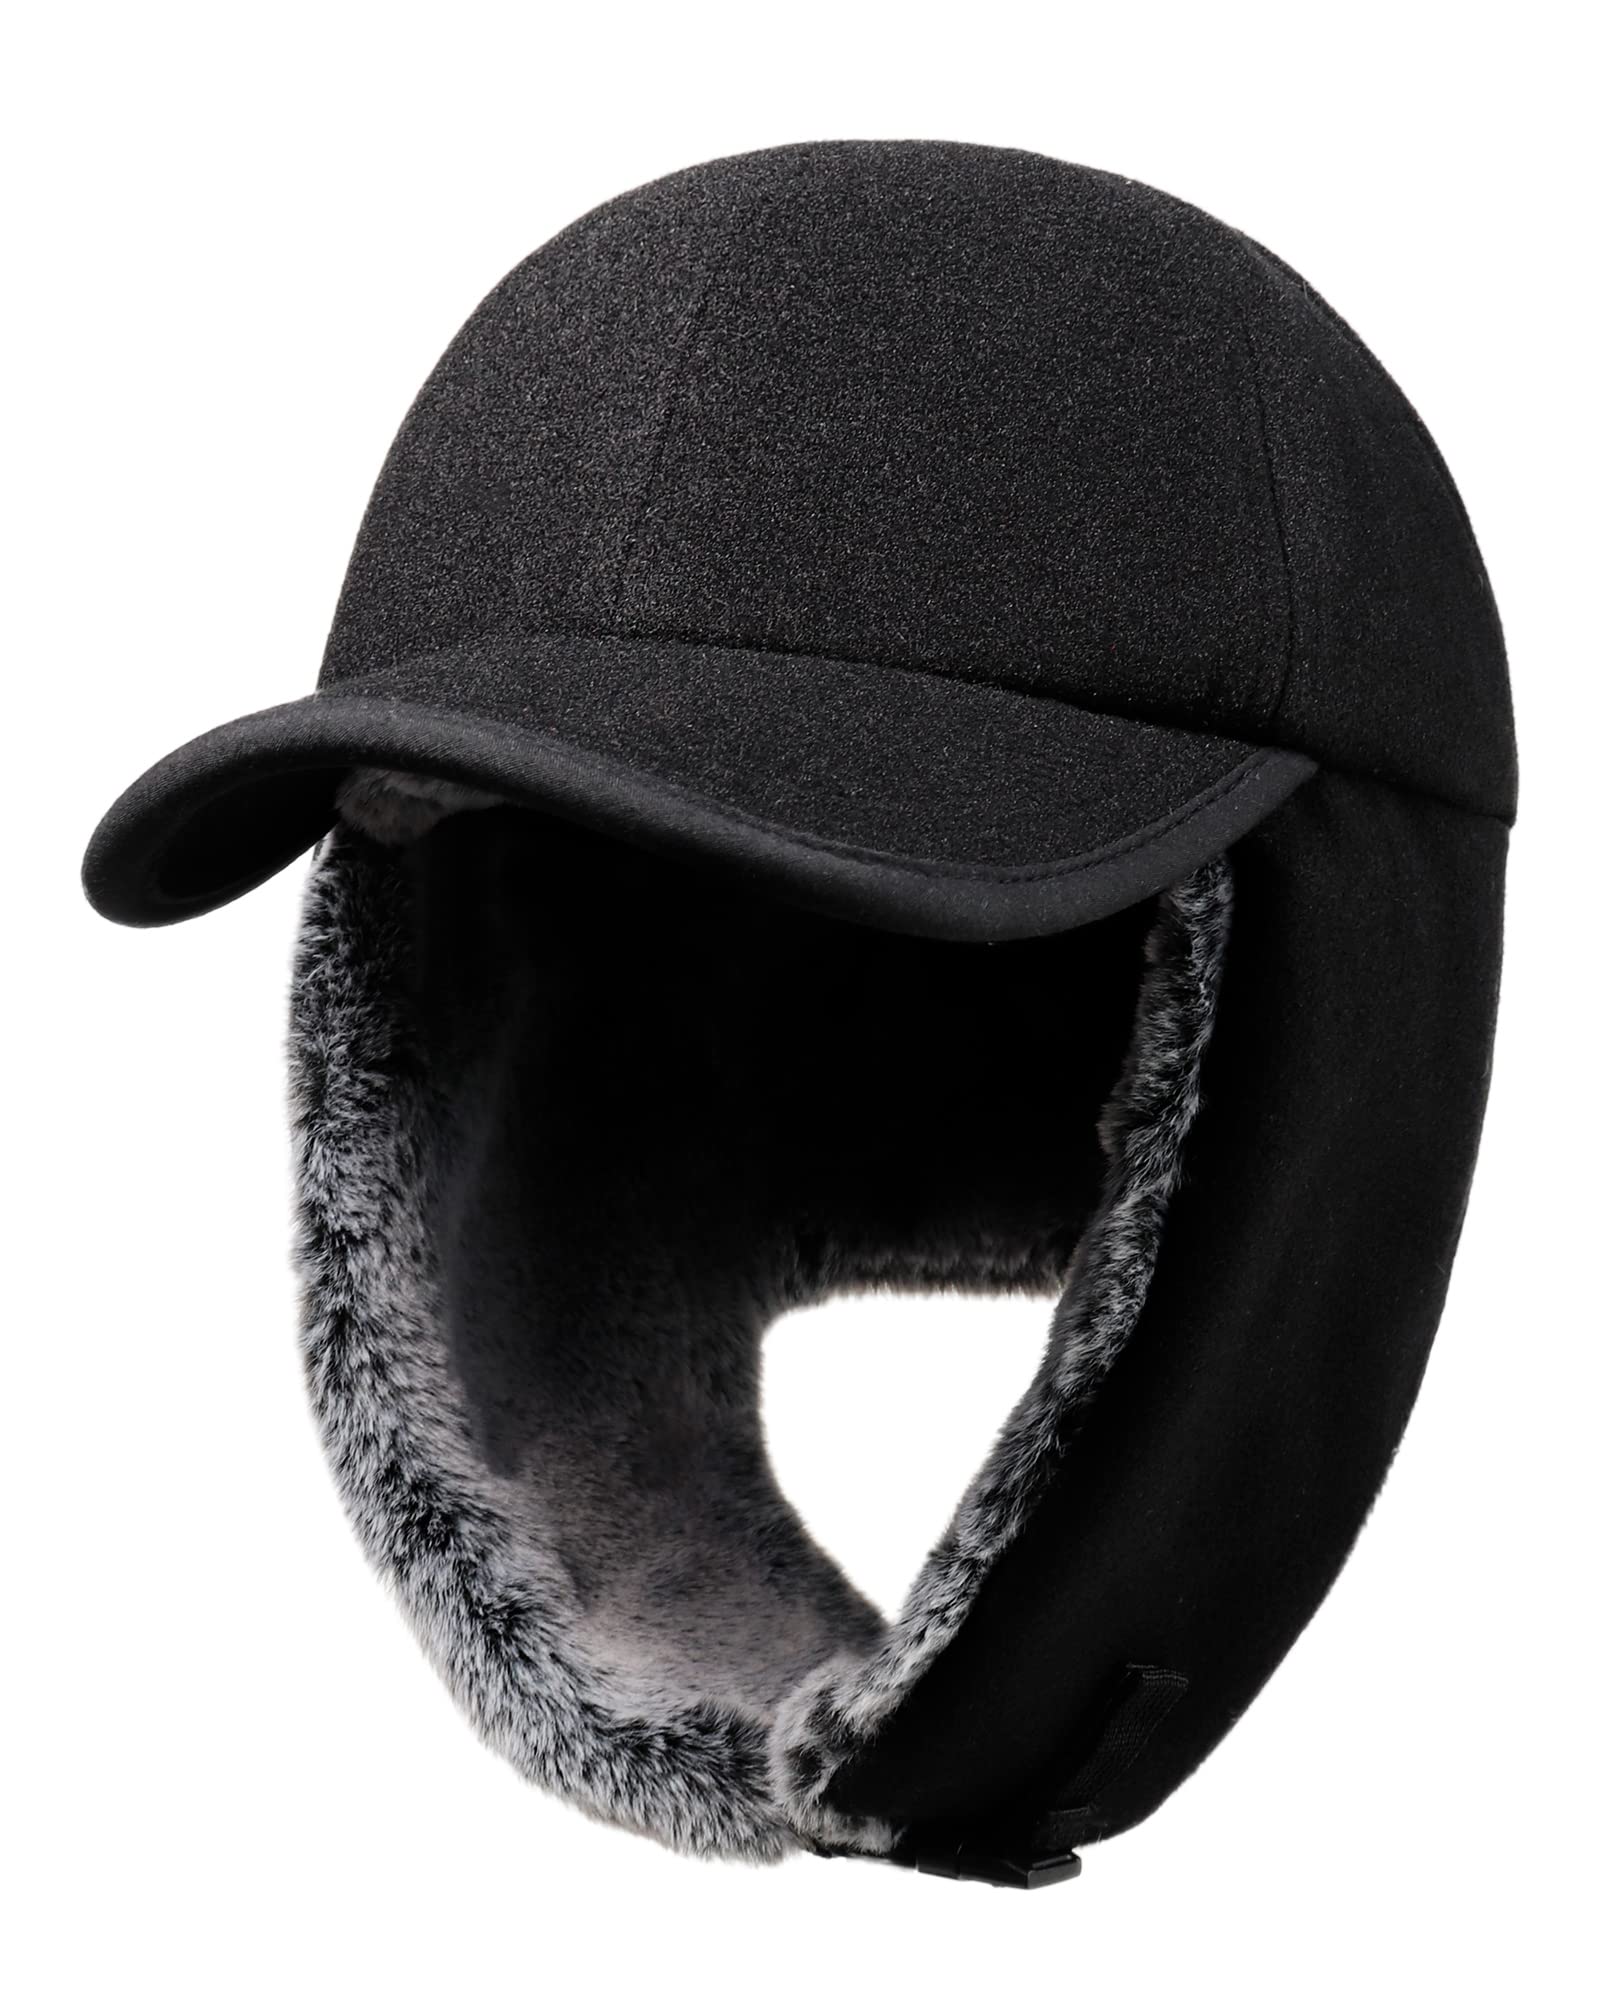 Blend Flaps Winter Fully Long Cap Woolen Fur Gisdanchz Black Lined Faux Medium-Large Outer, with - Ear Baseball